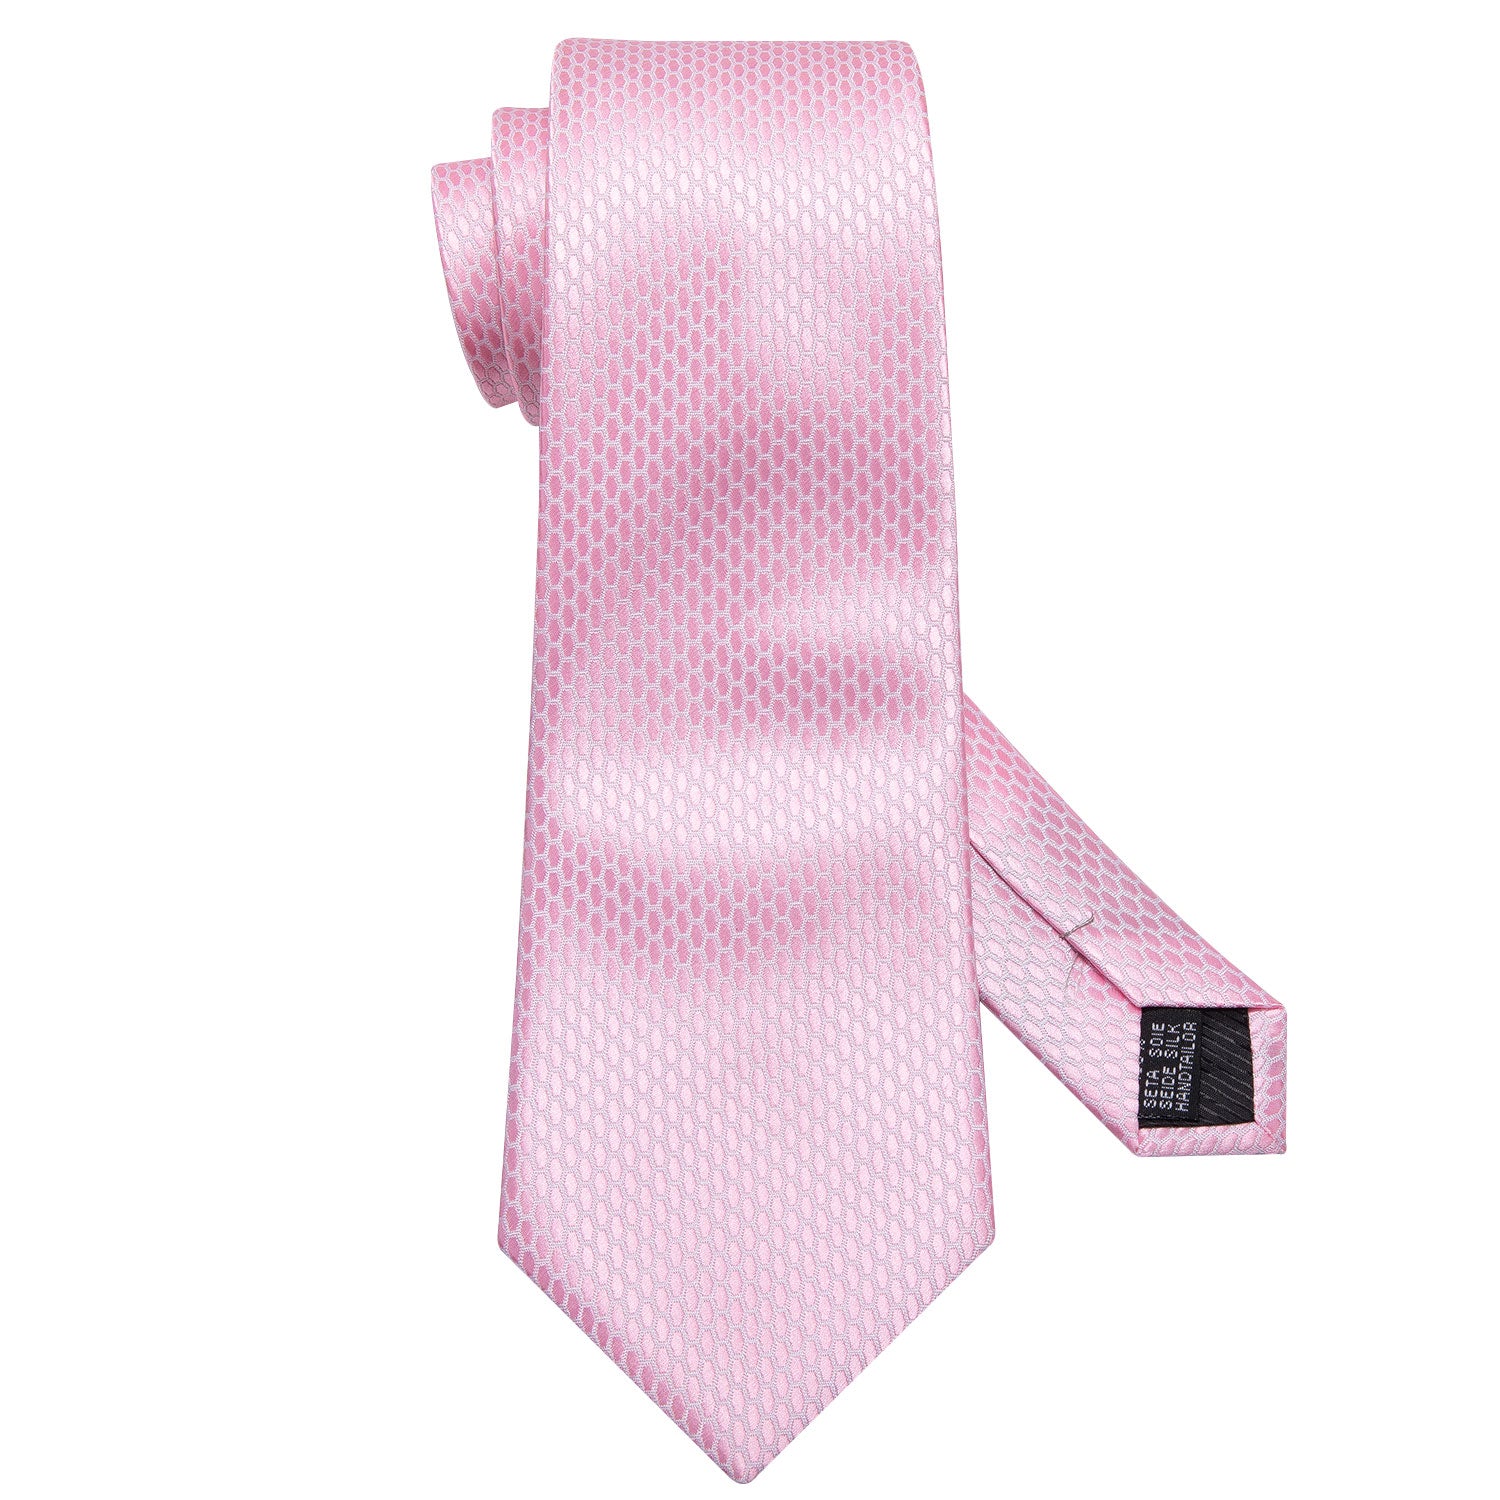 Pink Solid Tie Pocket Square Cufflinks Set